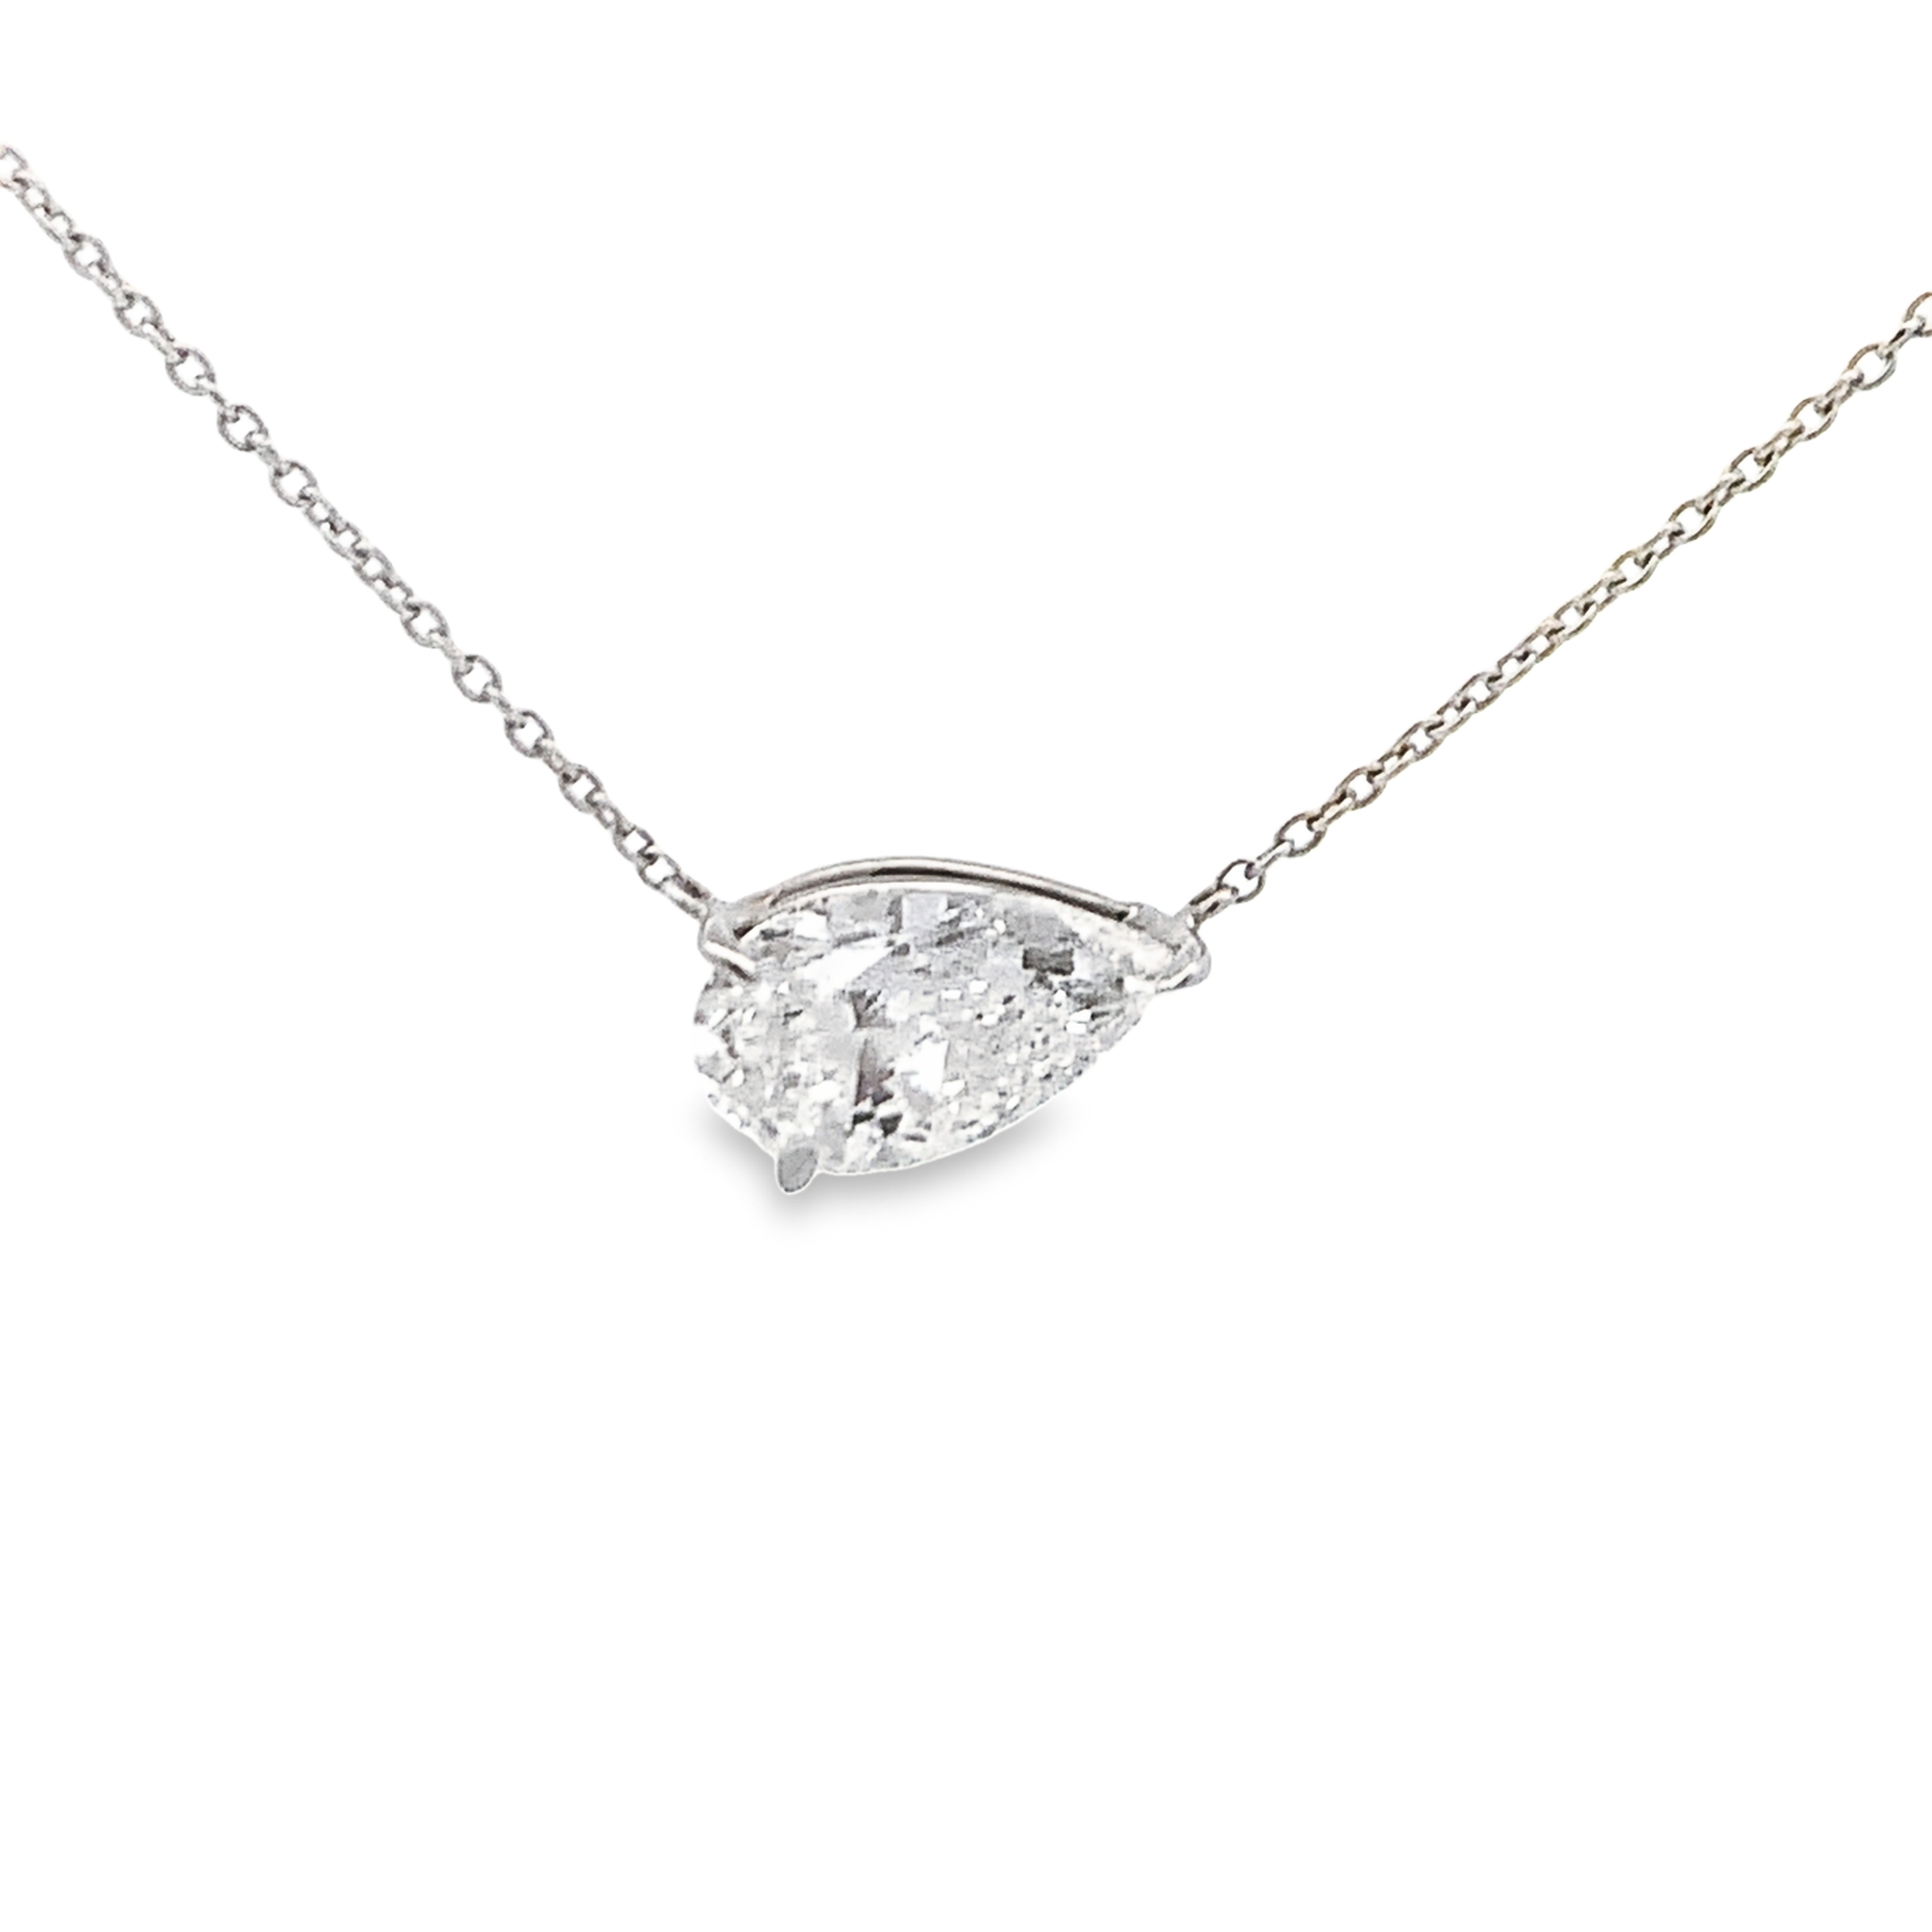 Norman Silverman 18K White Gold Diamond Solitaire Pendant Necklace 16